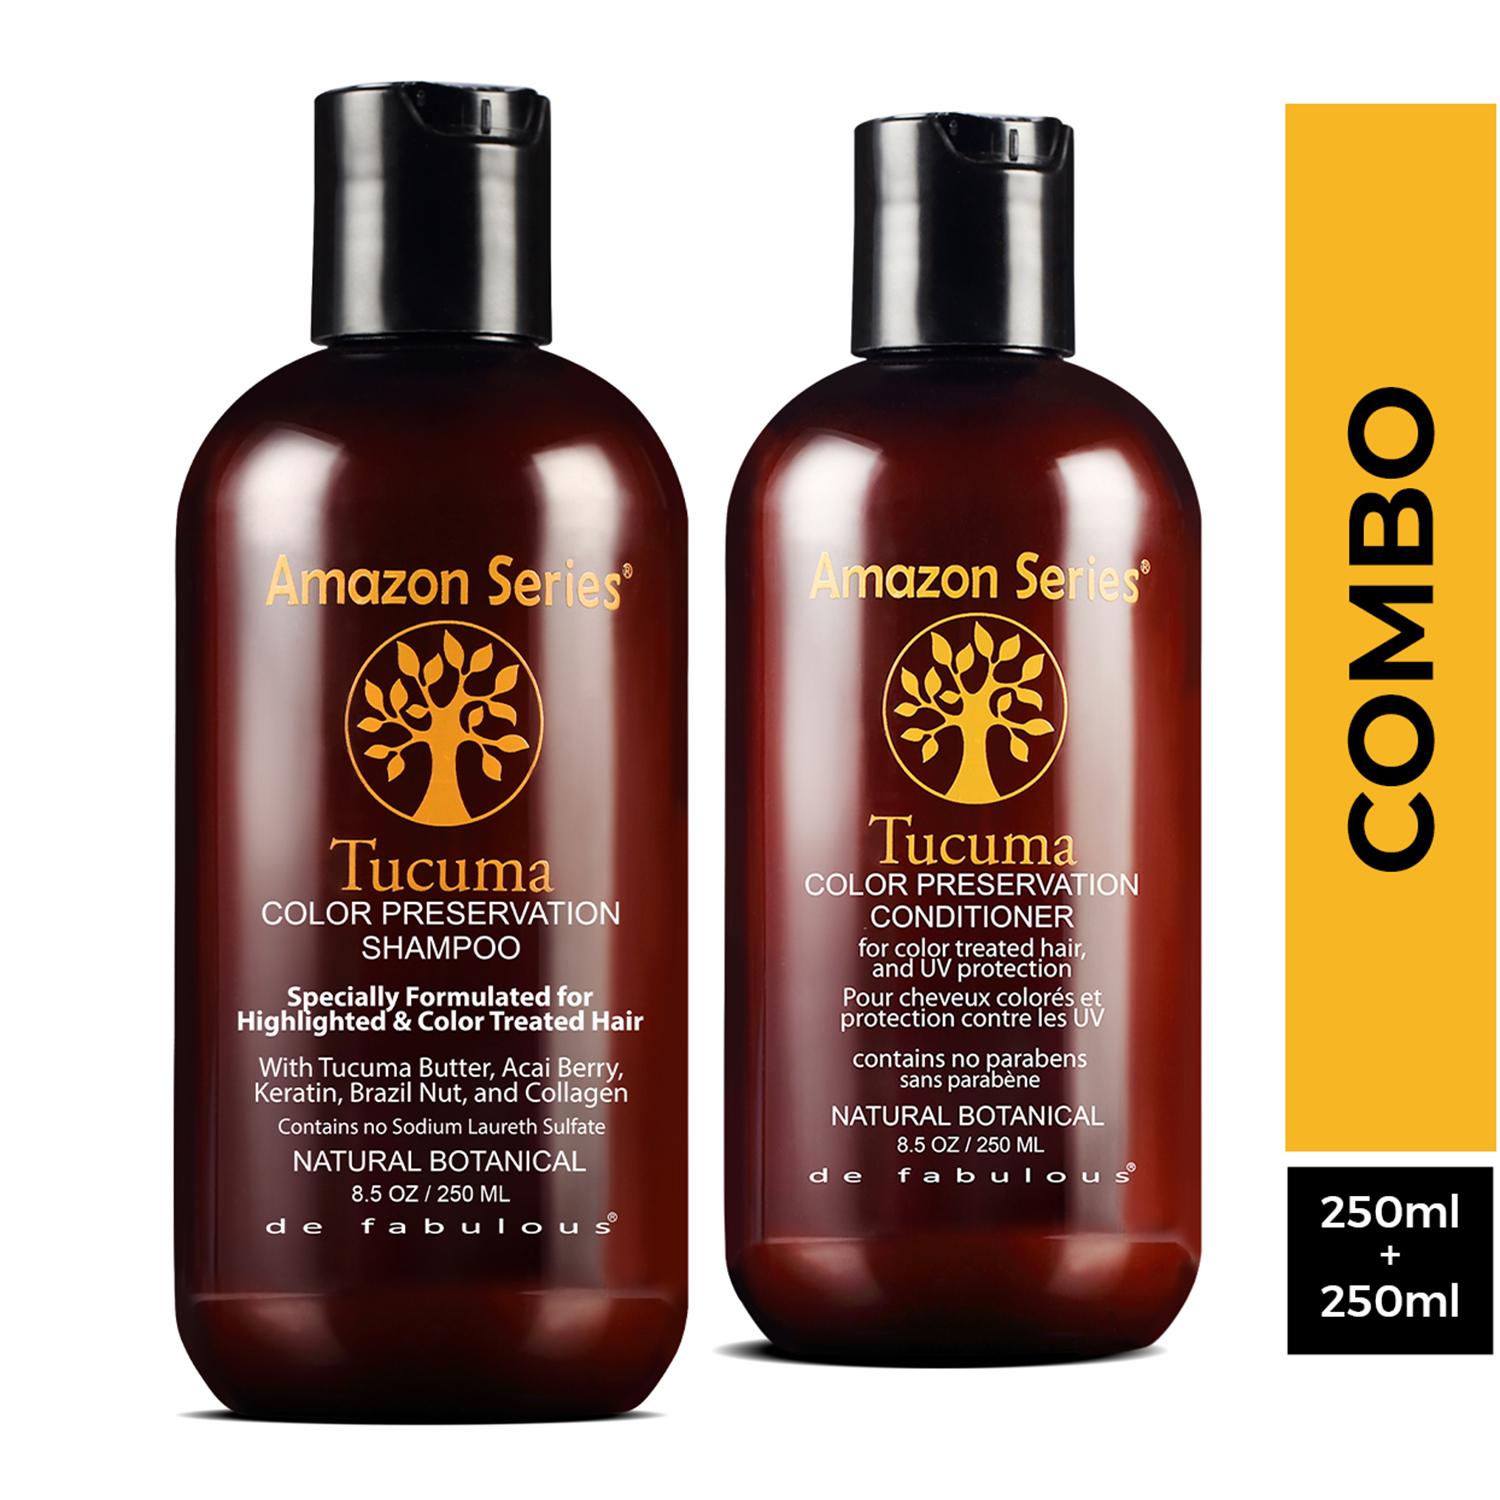 Amazon Series | Amazon Series Tucuma Color Preservation Shampoo and Conditioner Combo